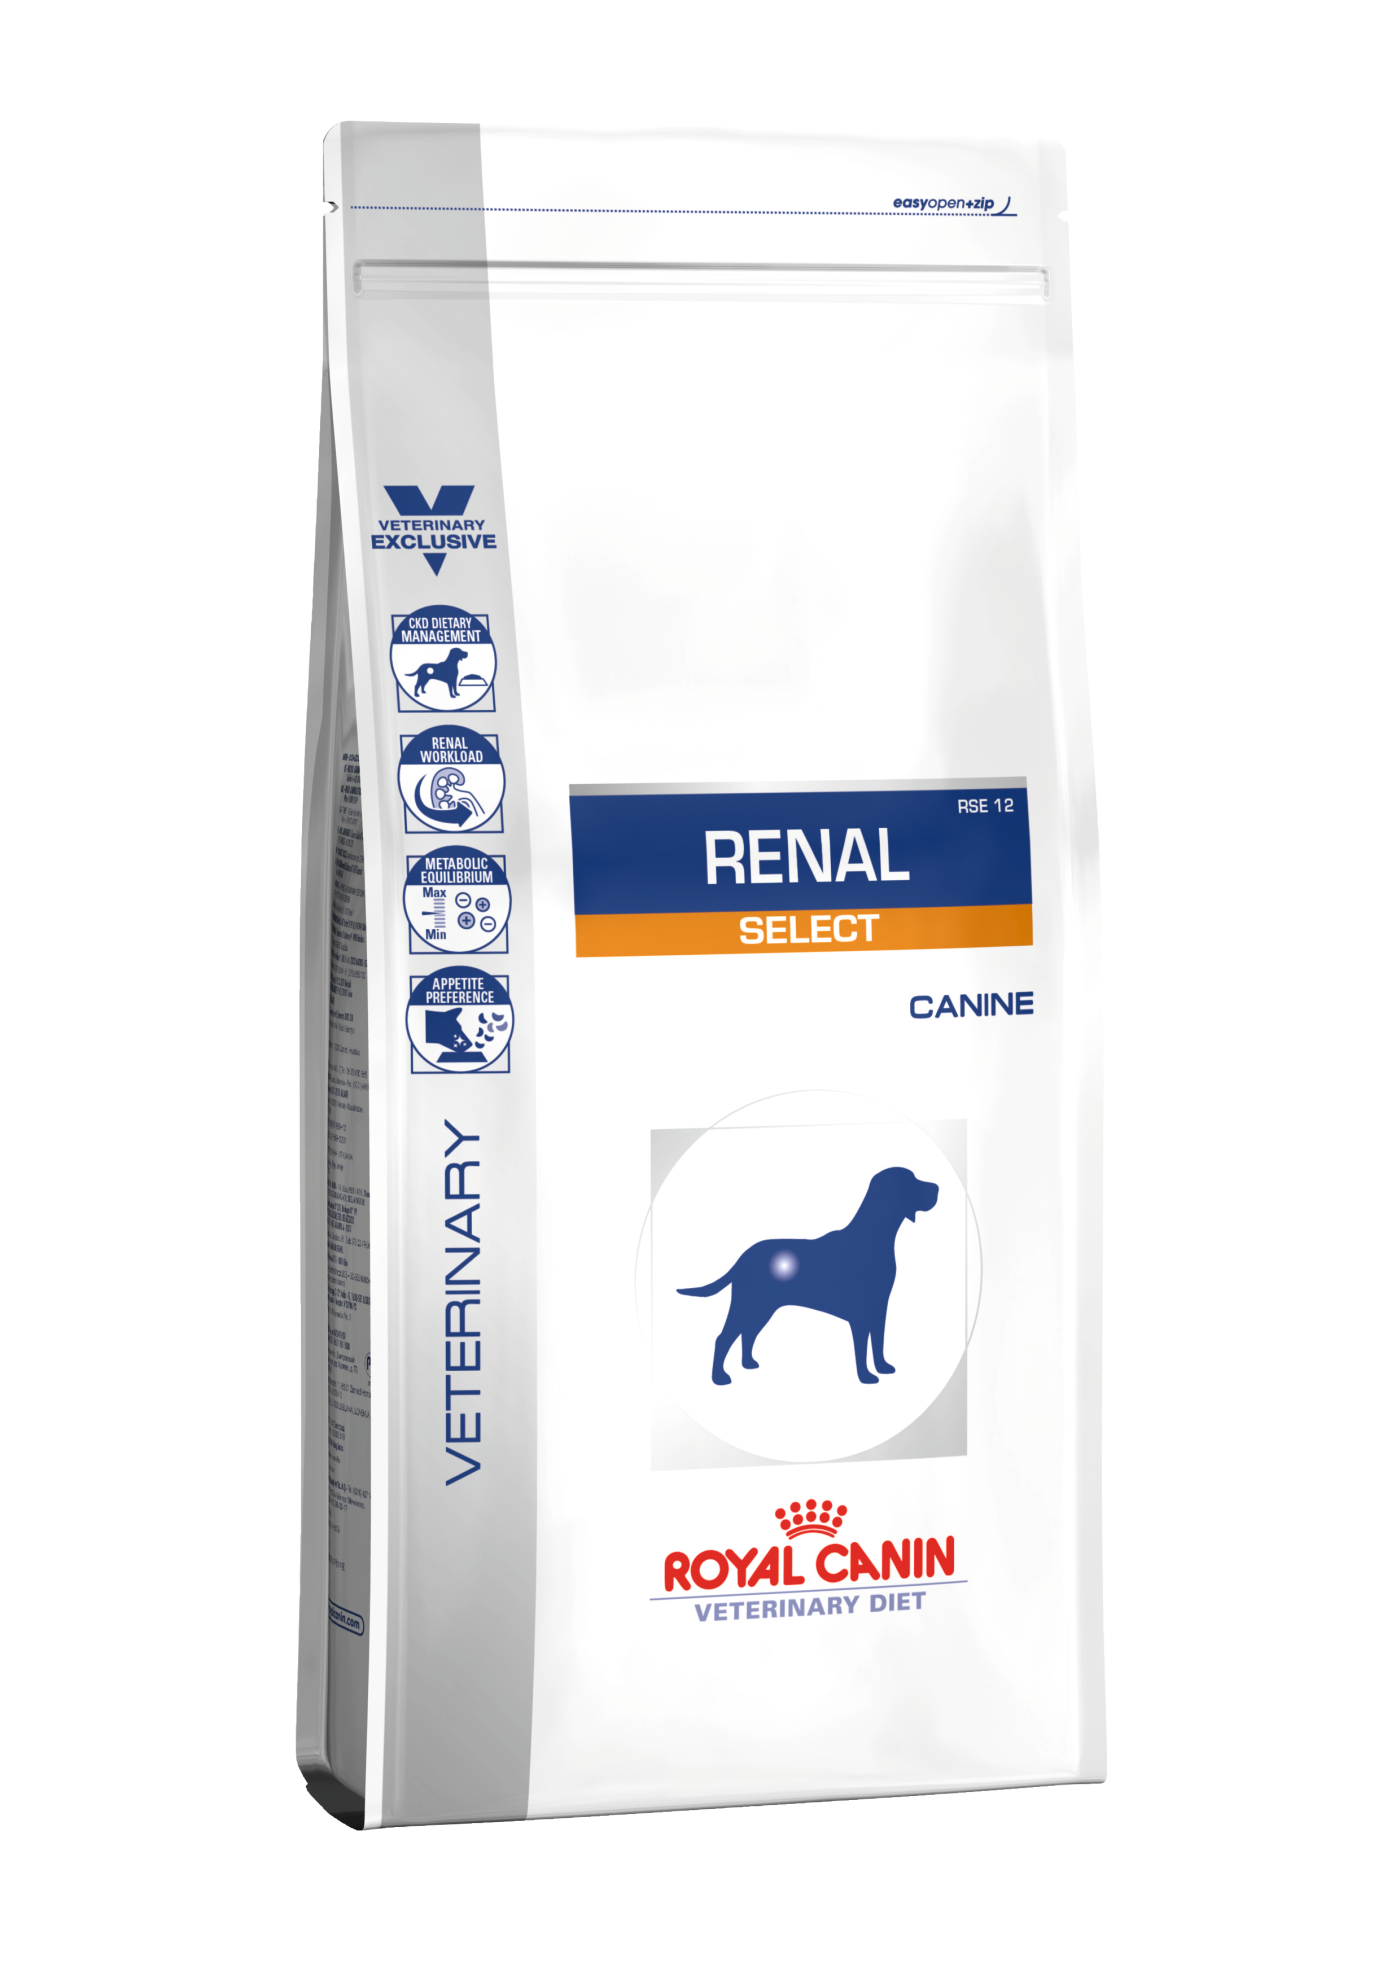 royal canin renal dog food